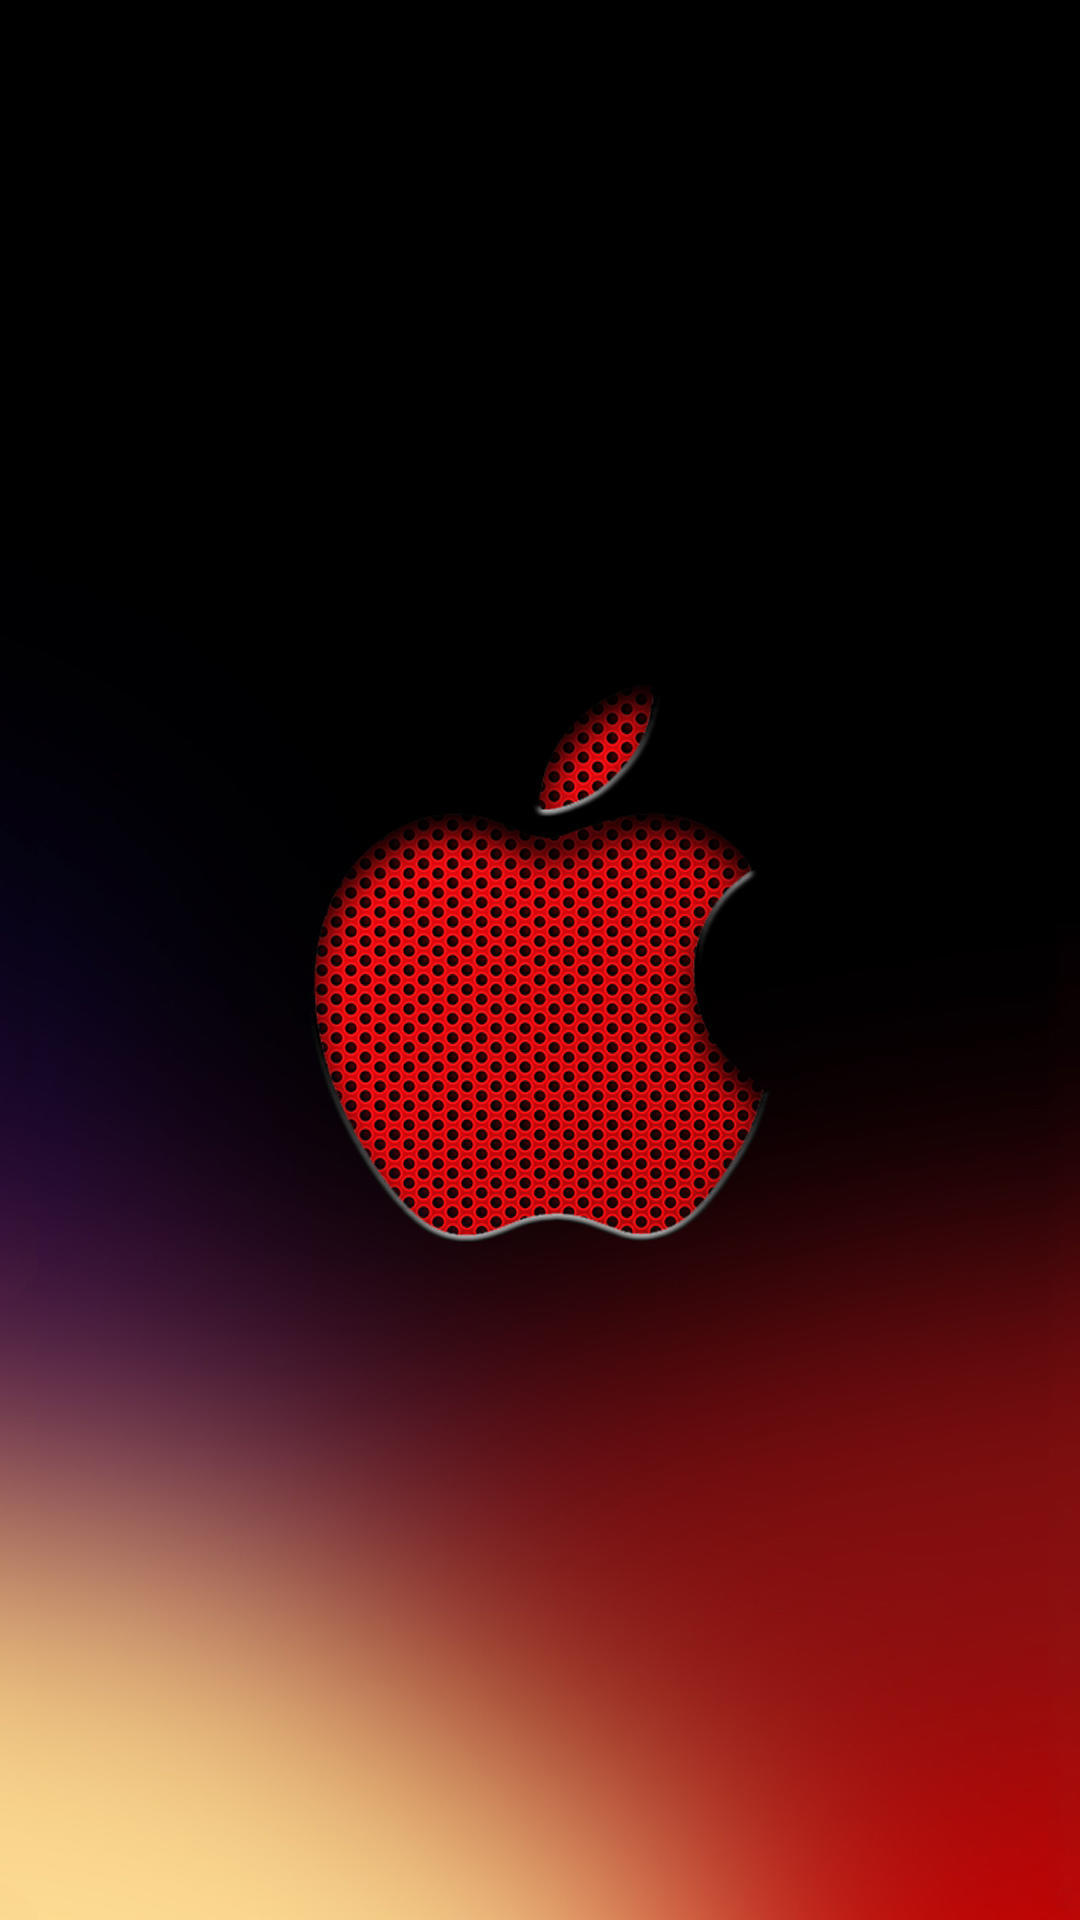 Iphone 7 Red Apple 1080x19 Wallpaper Teahub Io